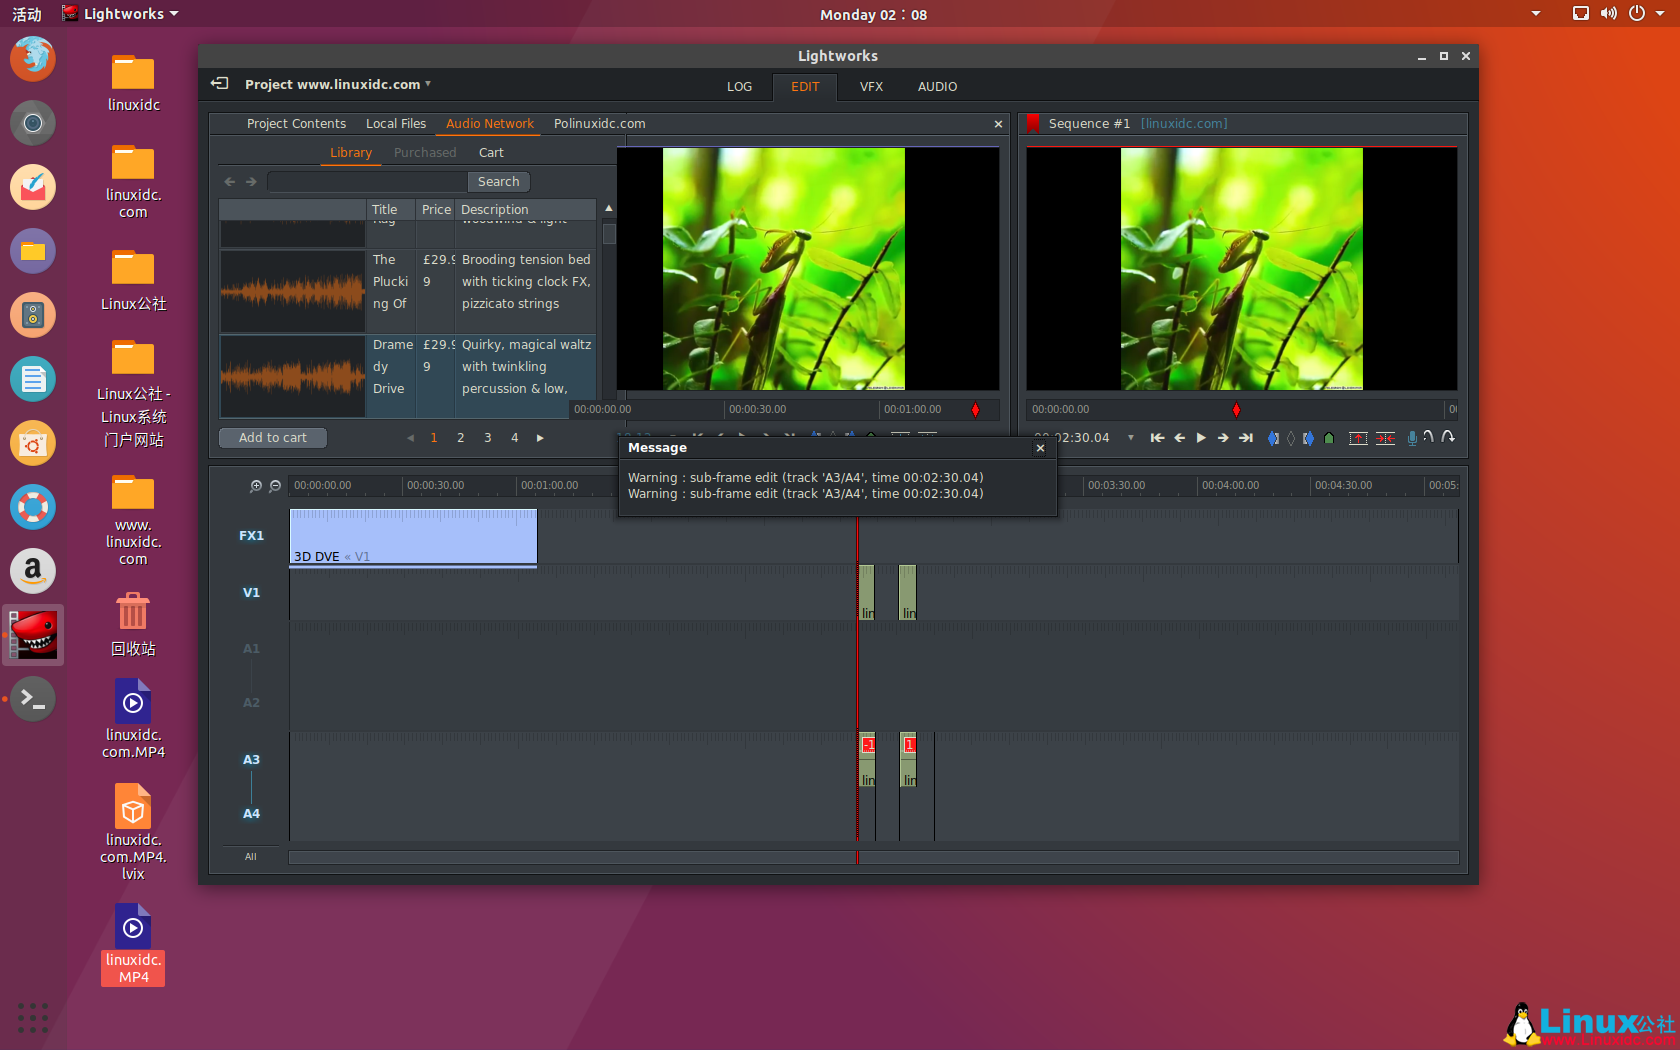 Ubuntu 18.04中PPA安装专业电影剪辑软件Lightworks 14.5